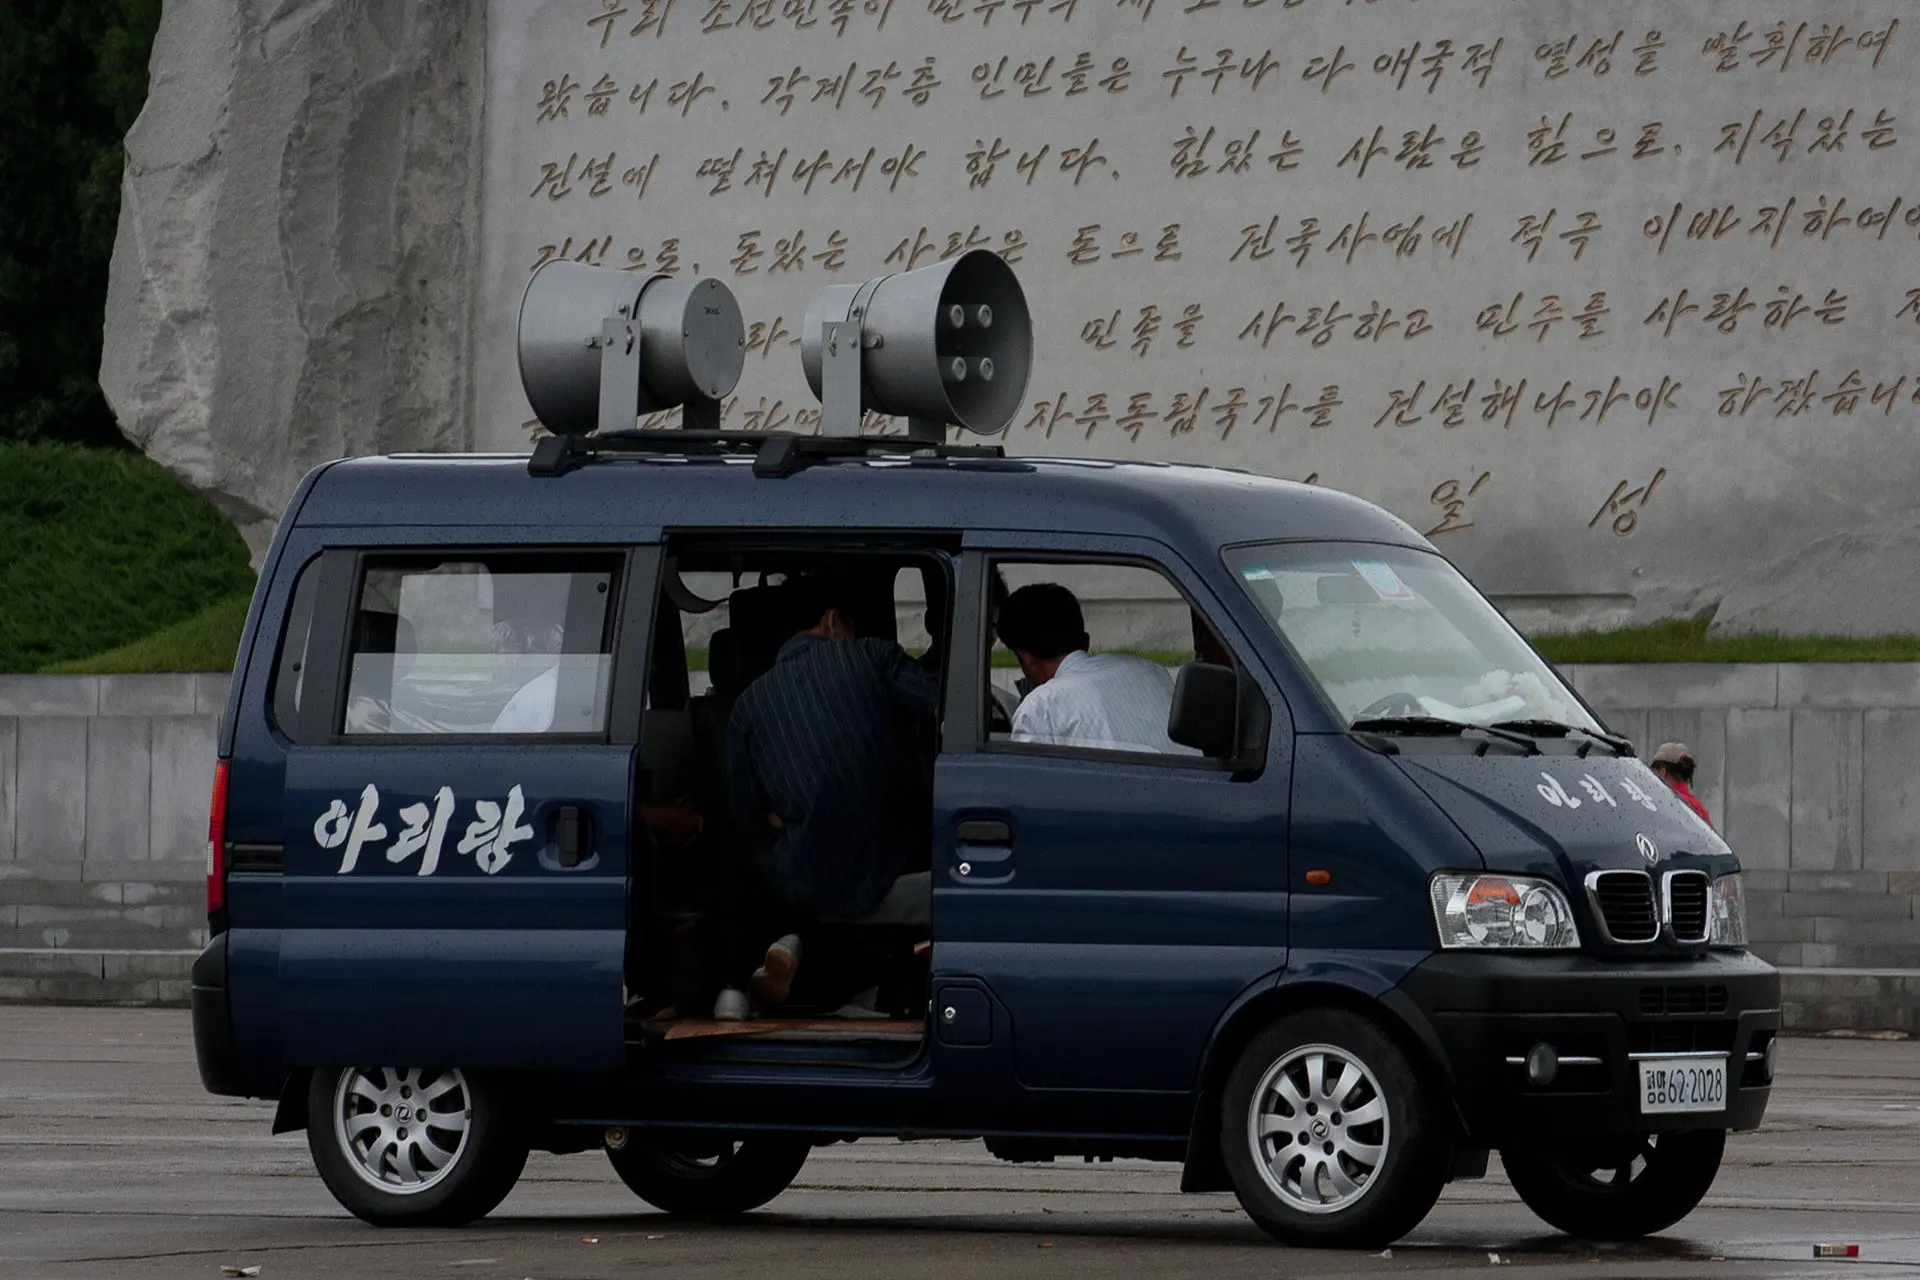 Mobil propaganda pemerintah Korea Utara (Wikimedia Commons)